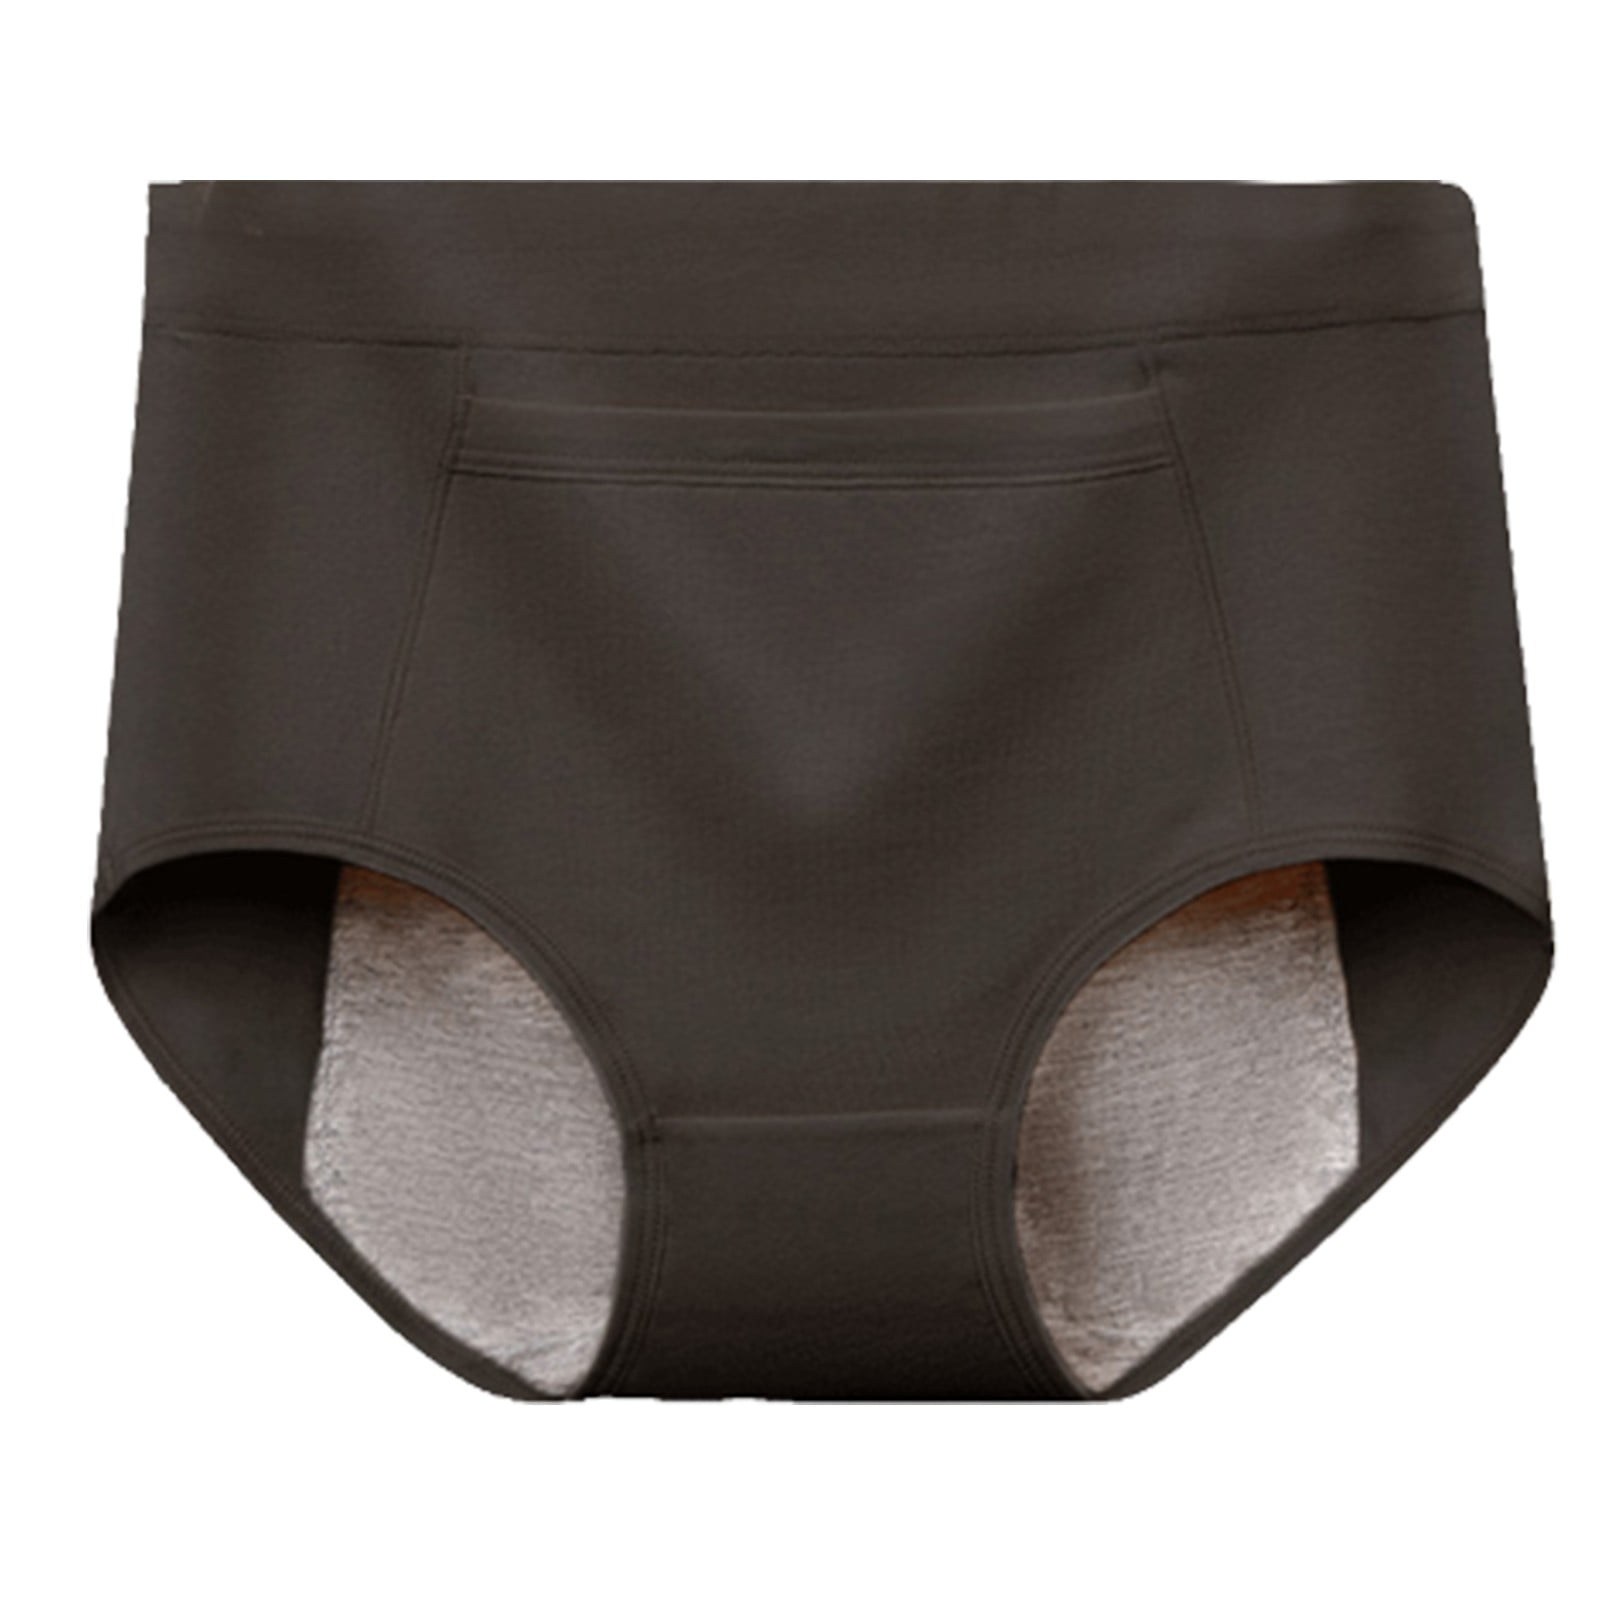 wirarpa Women's Cotton Underwear Comfy Mid Waisted Plus Size